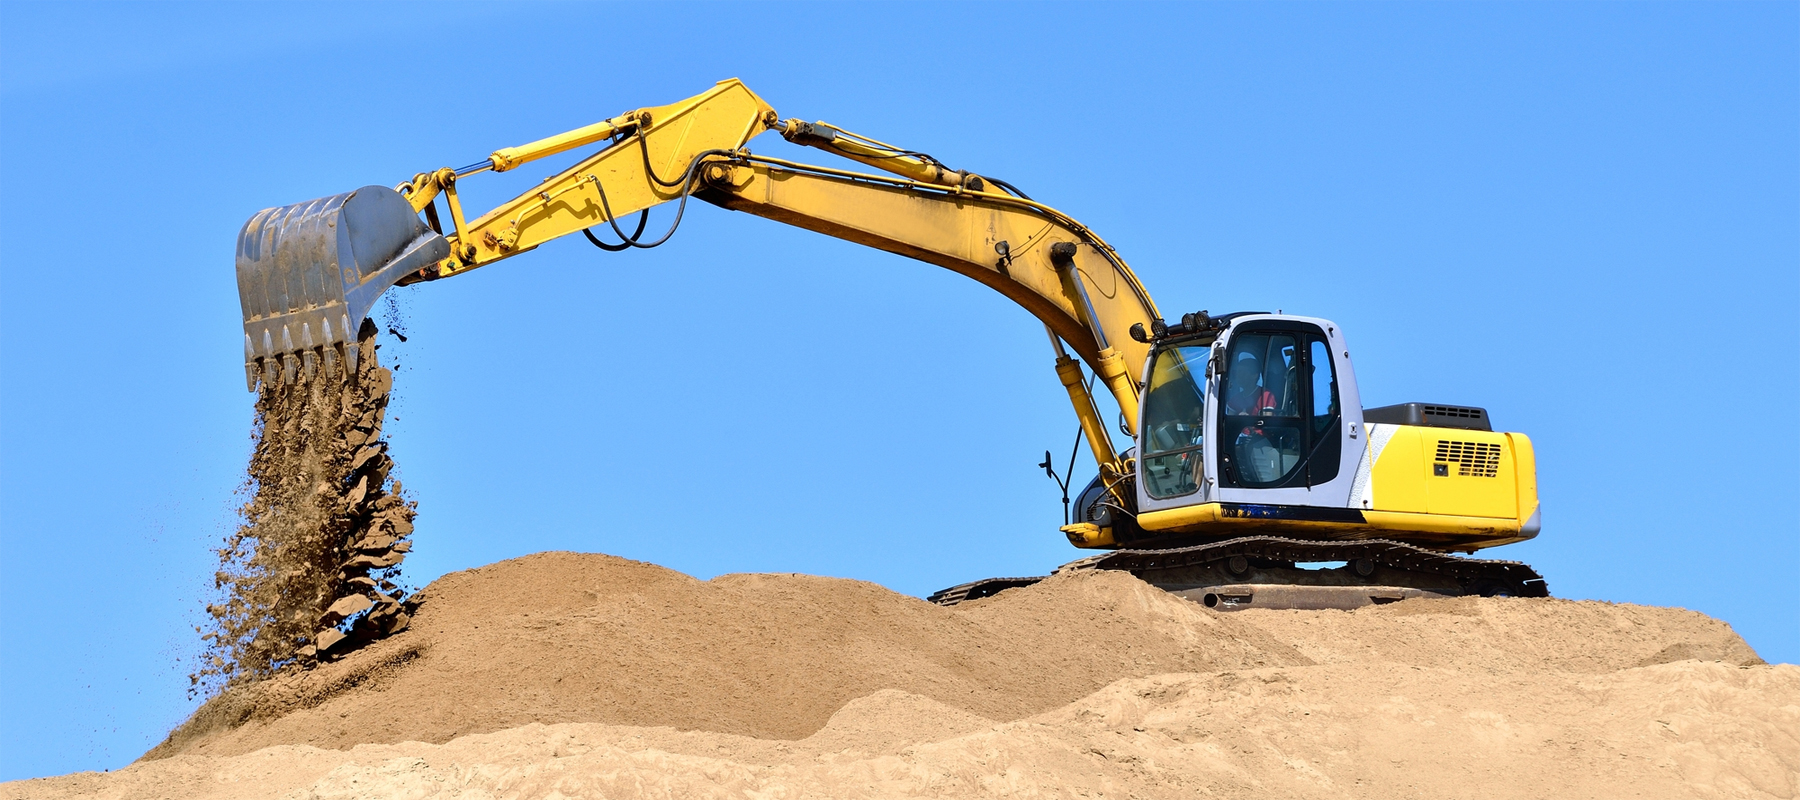 New Excavator Digging in Sand Dunes